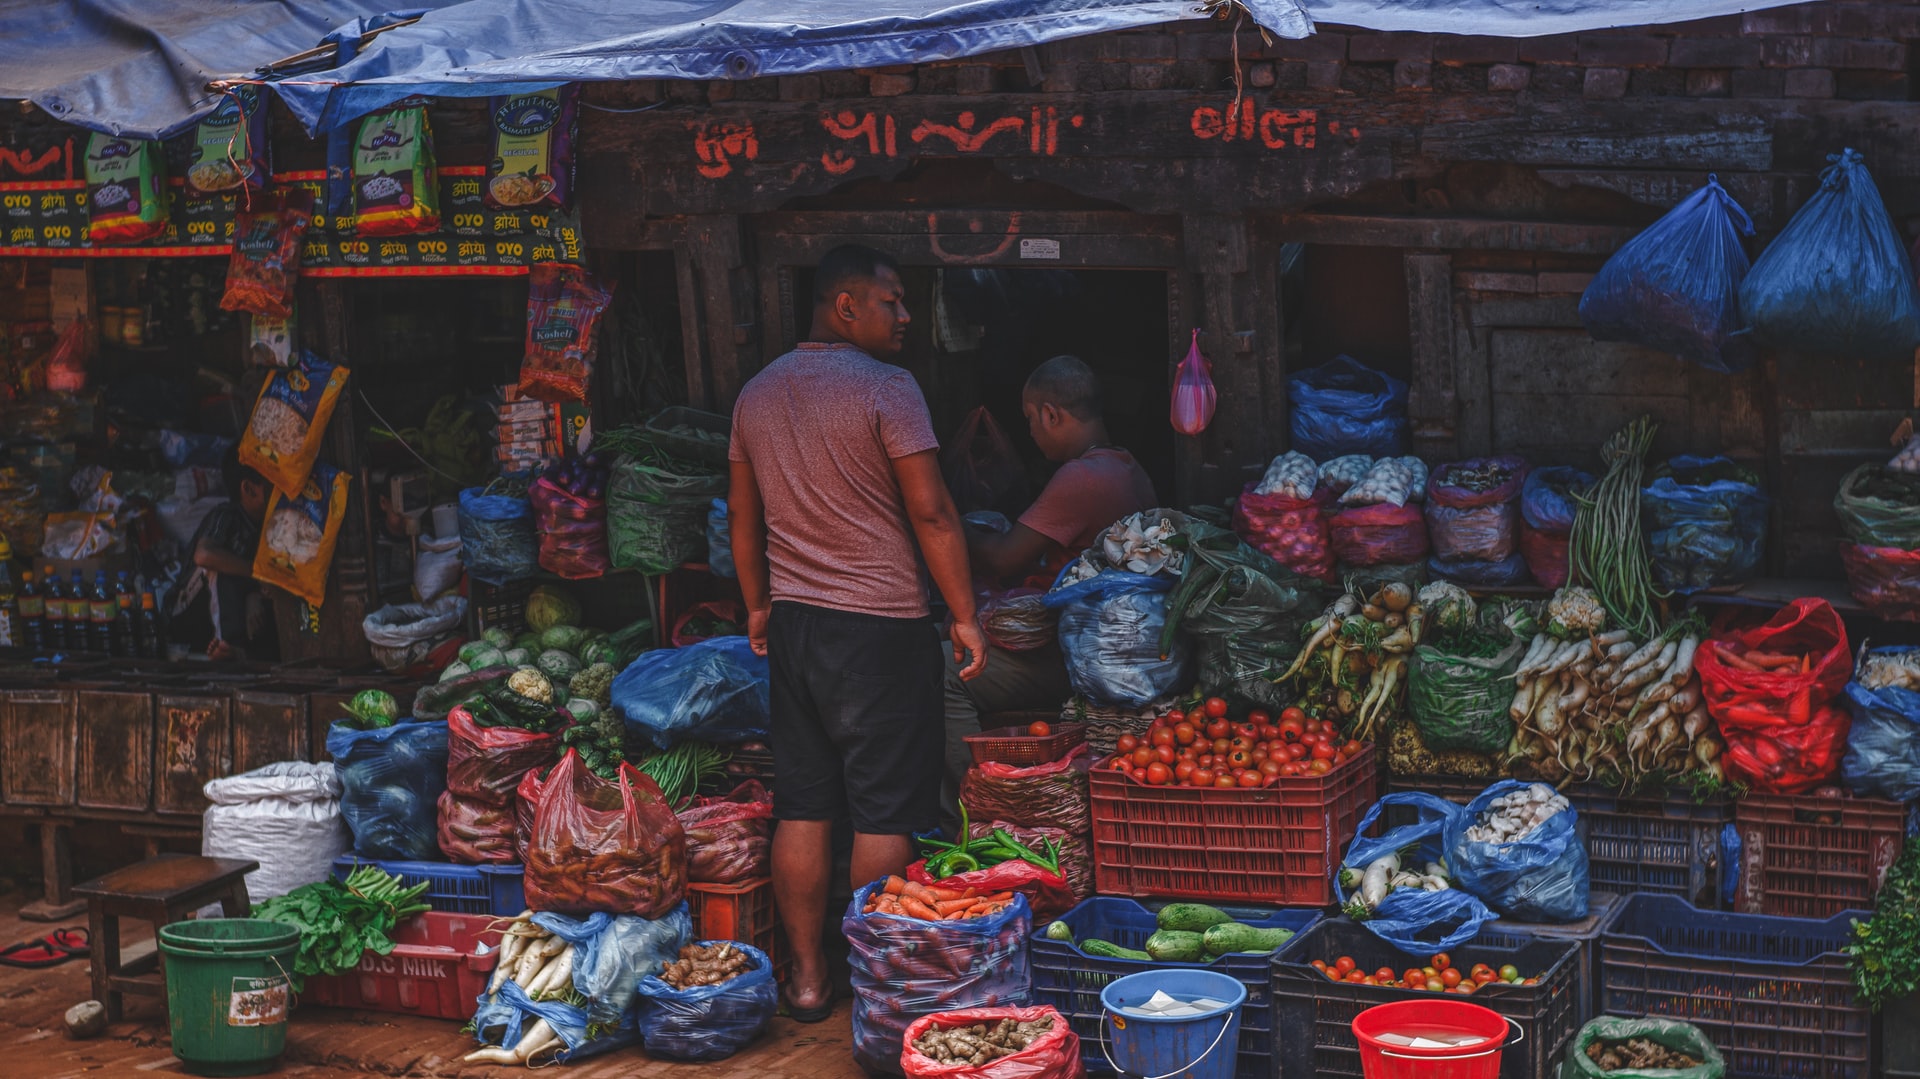 Vegetable Market - Food Price Inflation | Photo by: Tammy on Unsplash